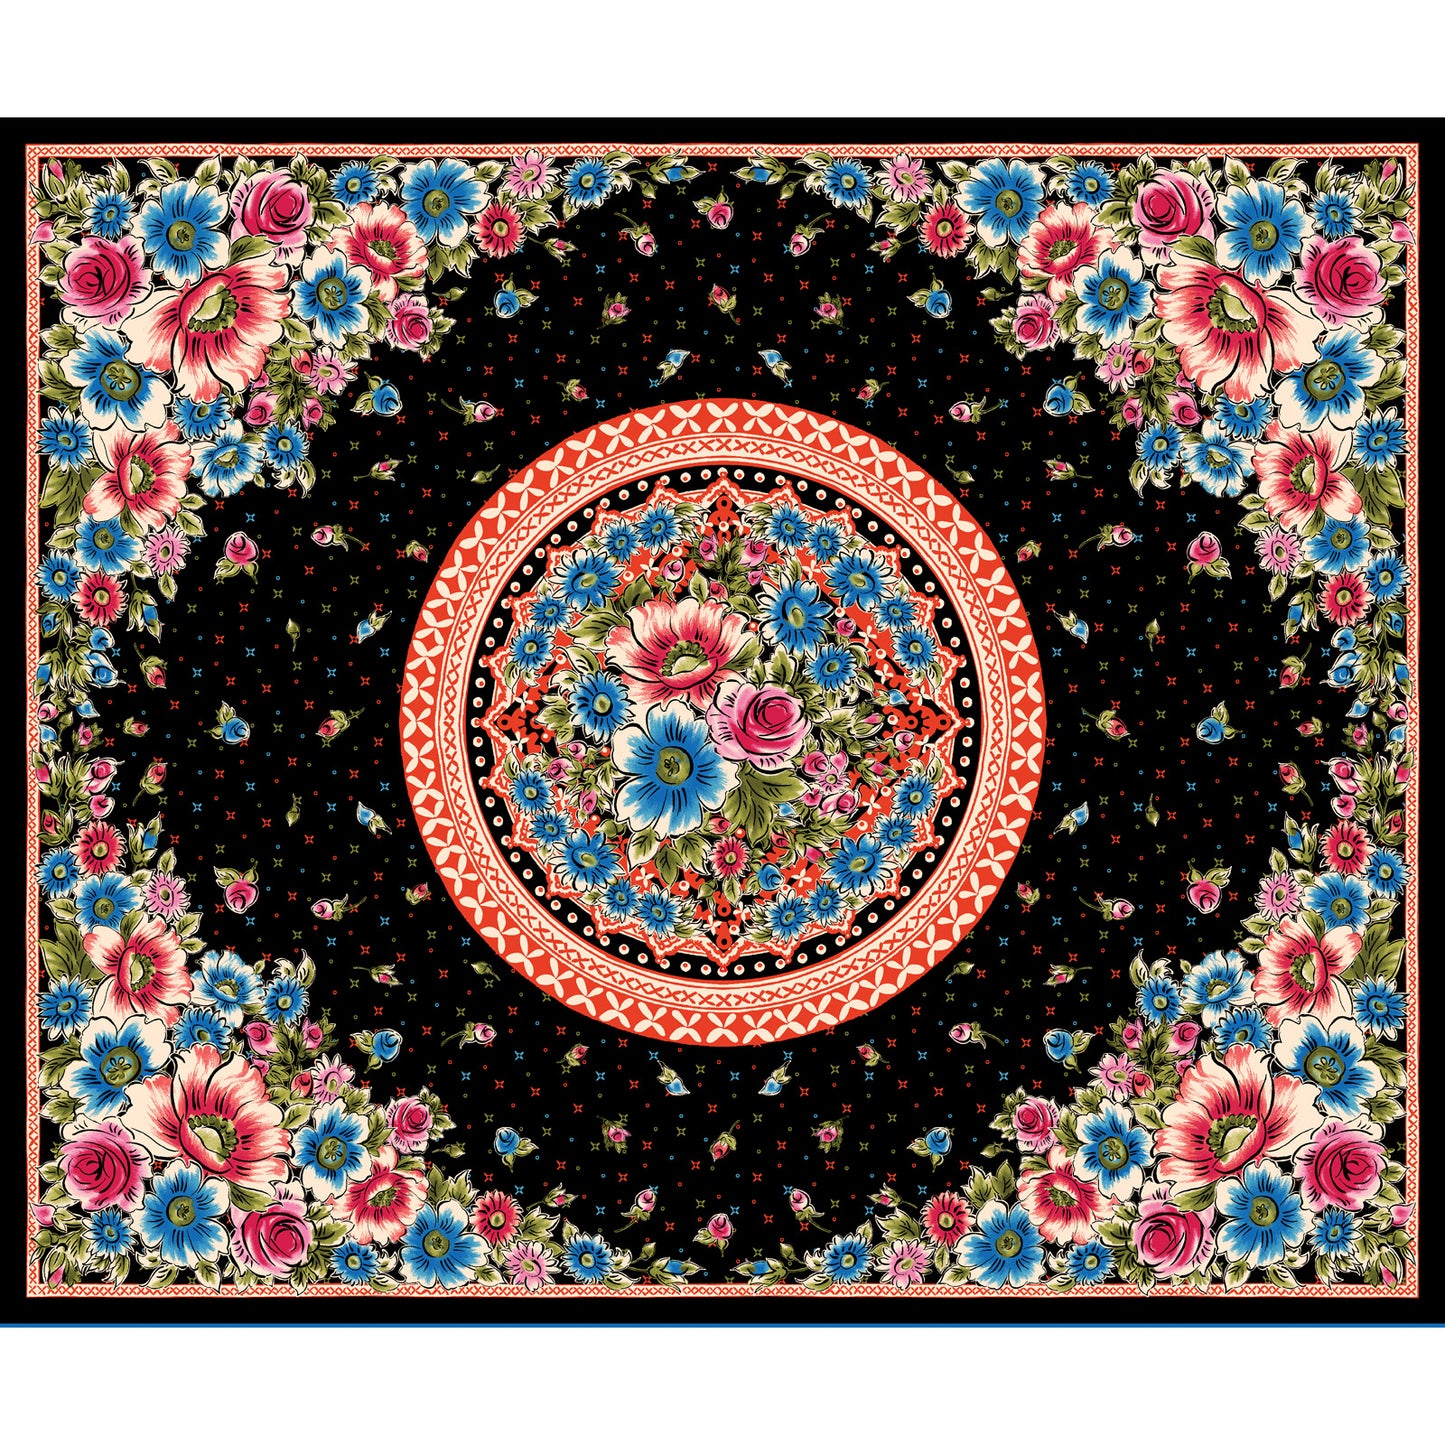 44 x 36 Stunning Panel Floral on Black Maywood Studio 100% Cotton All Over Print